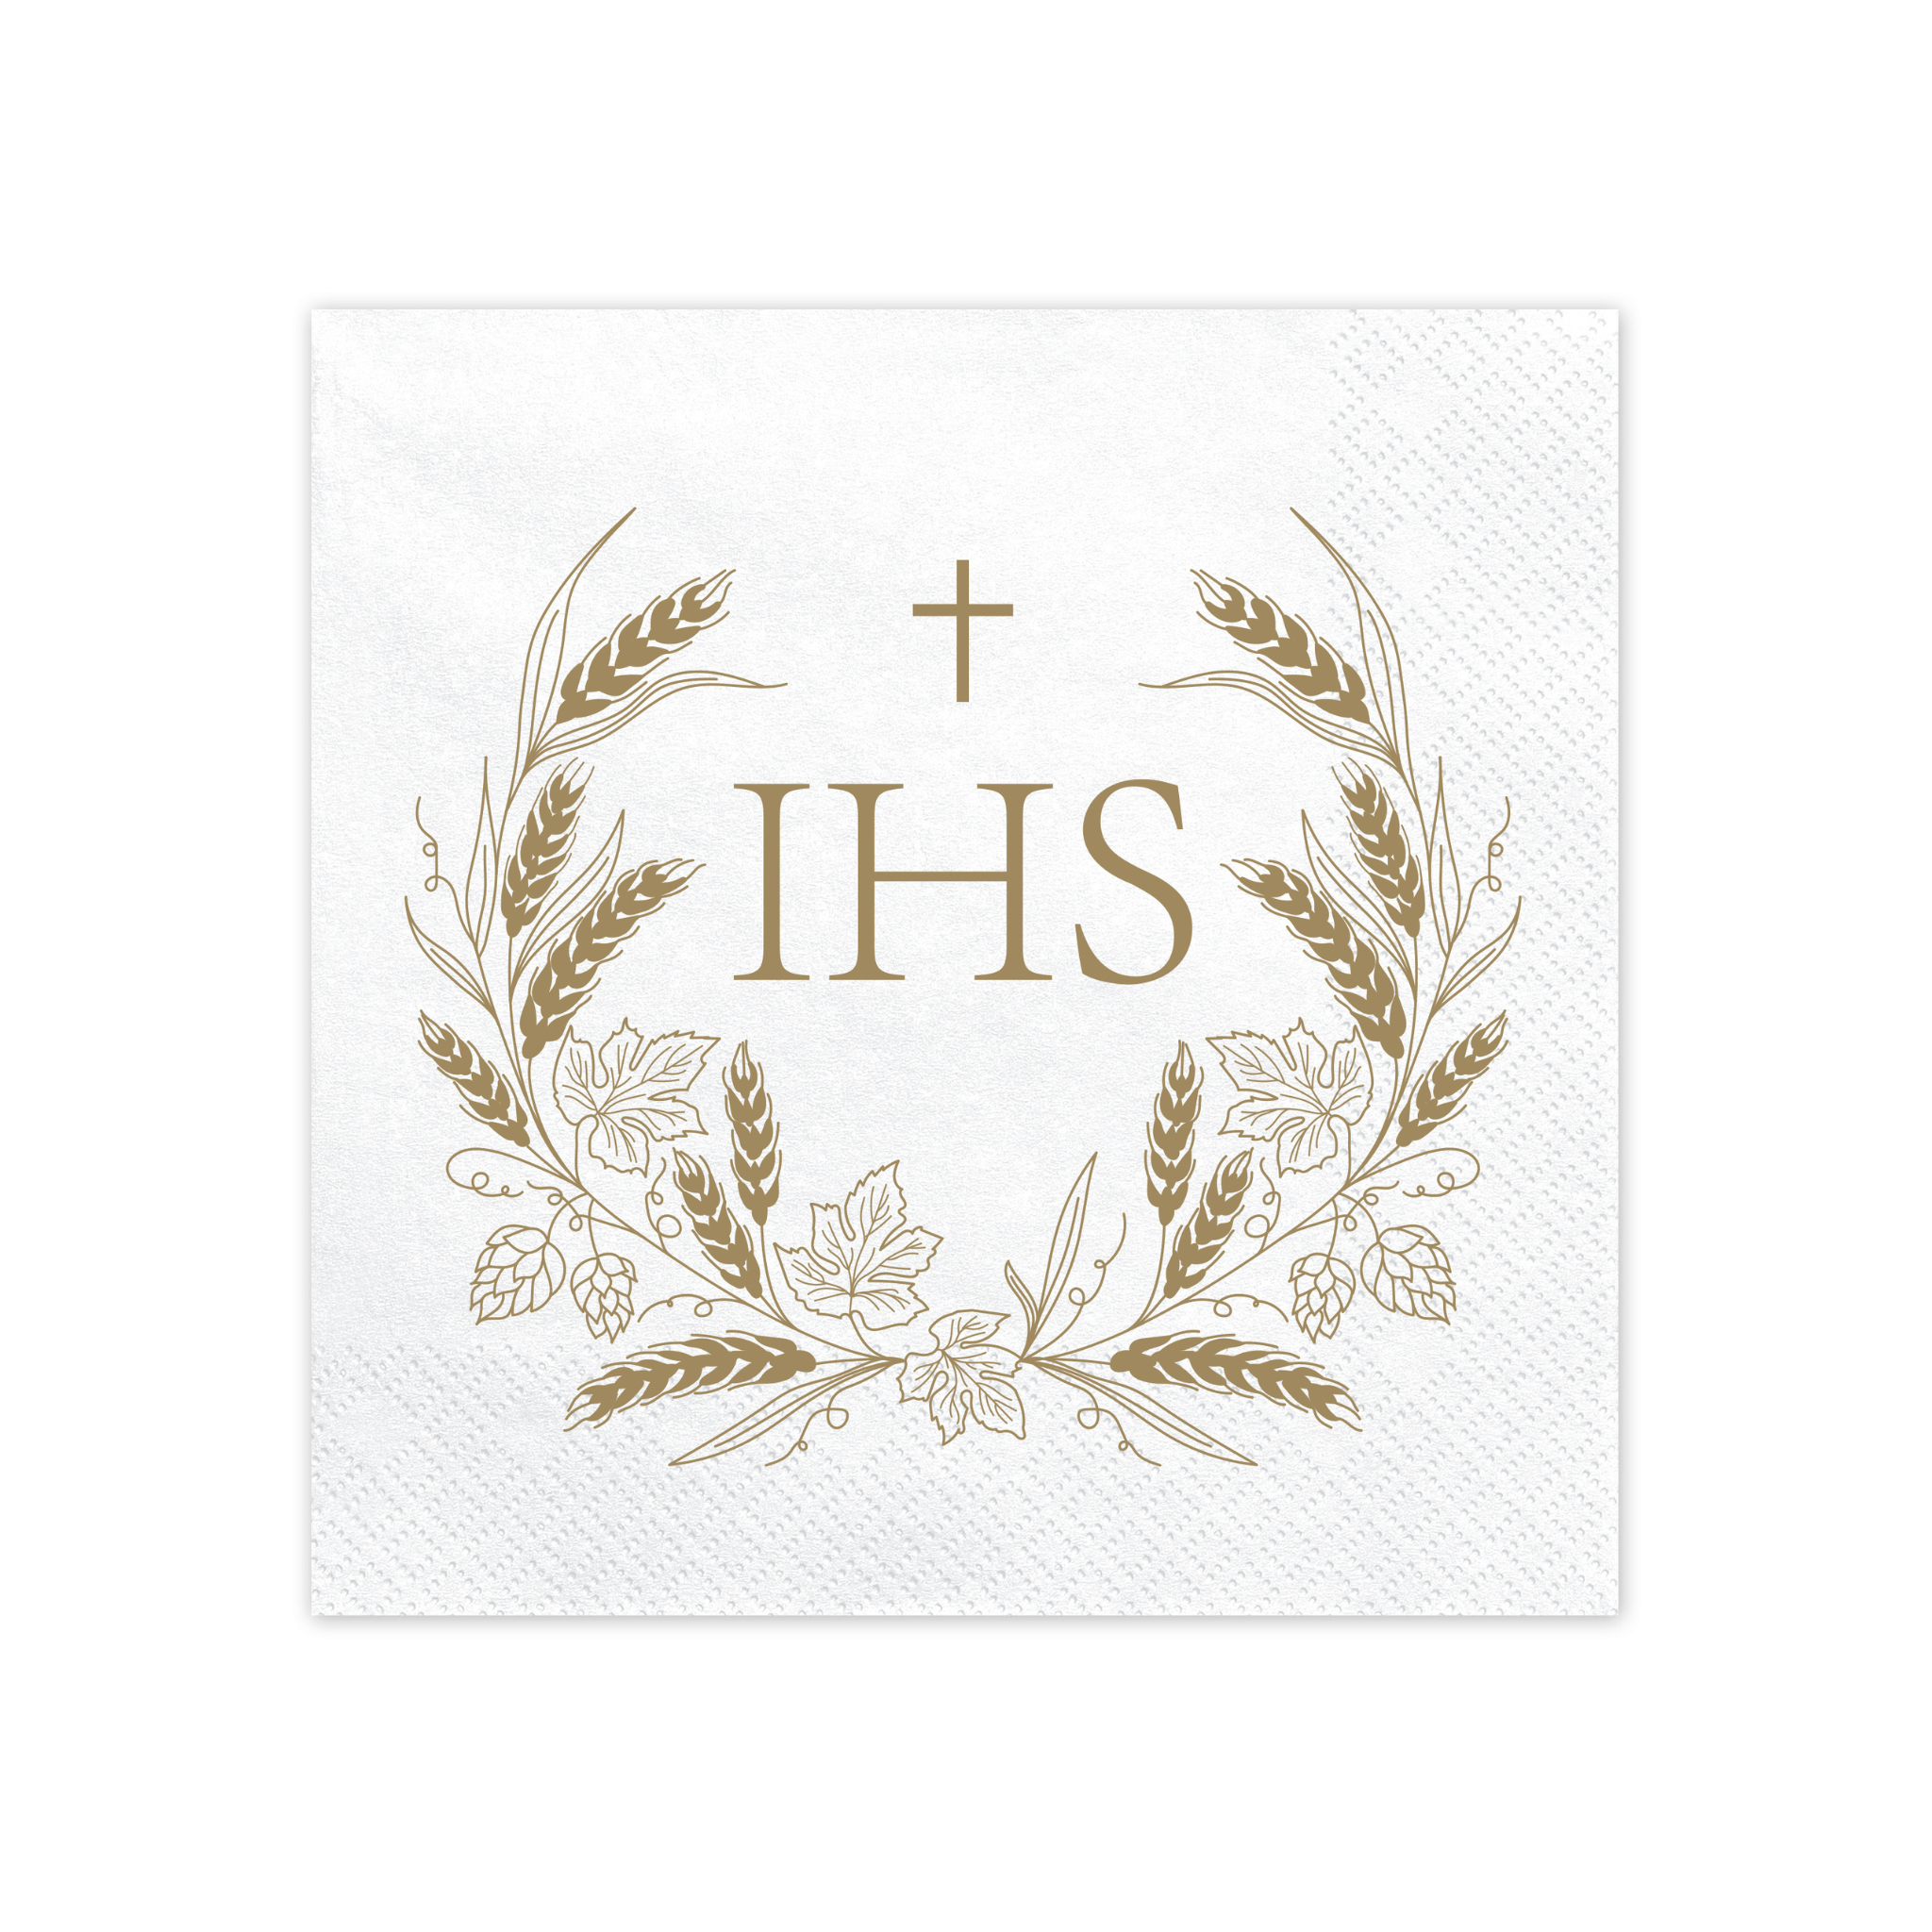 Holy Communion Napkins - "IHS" Inscription Set